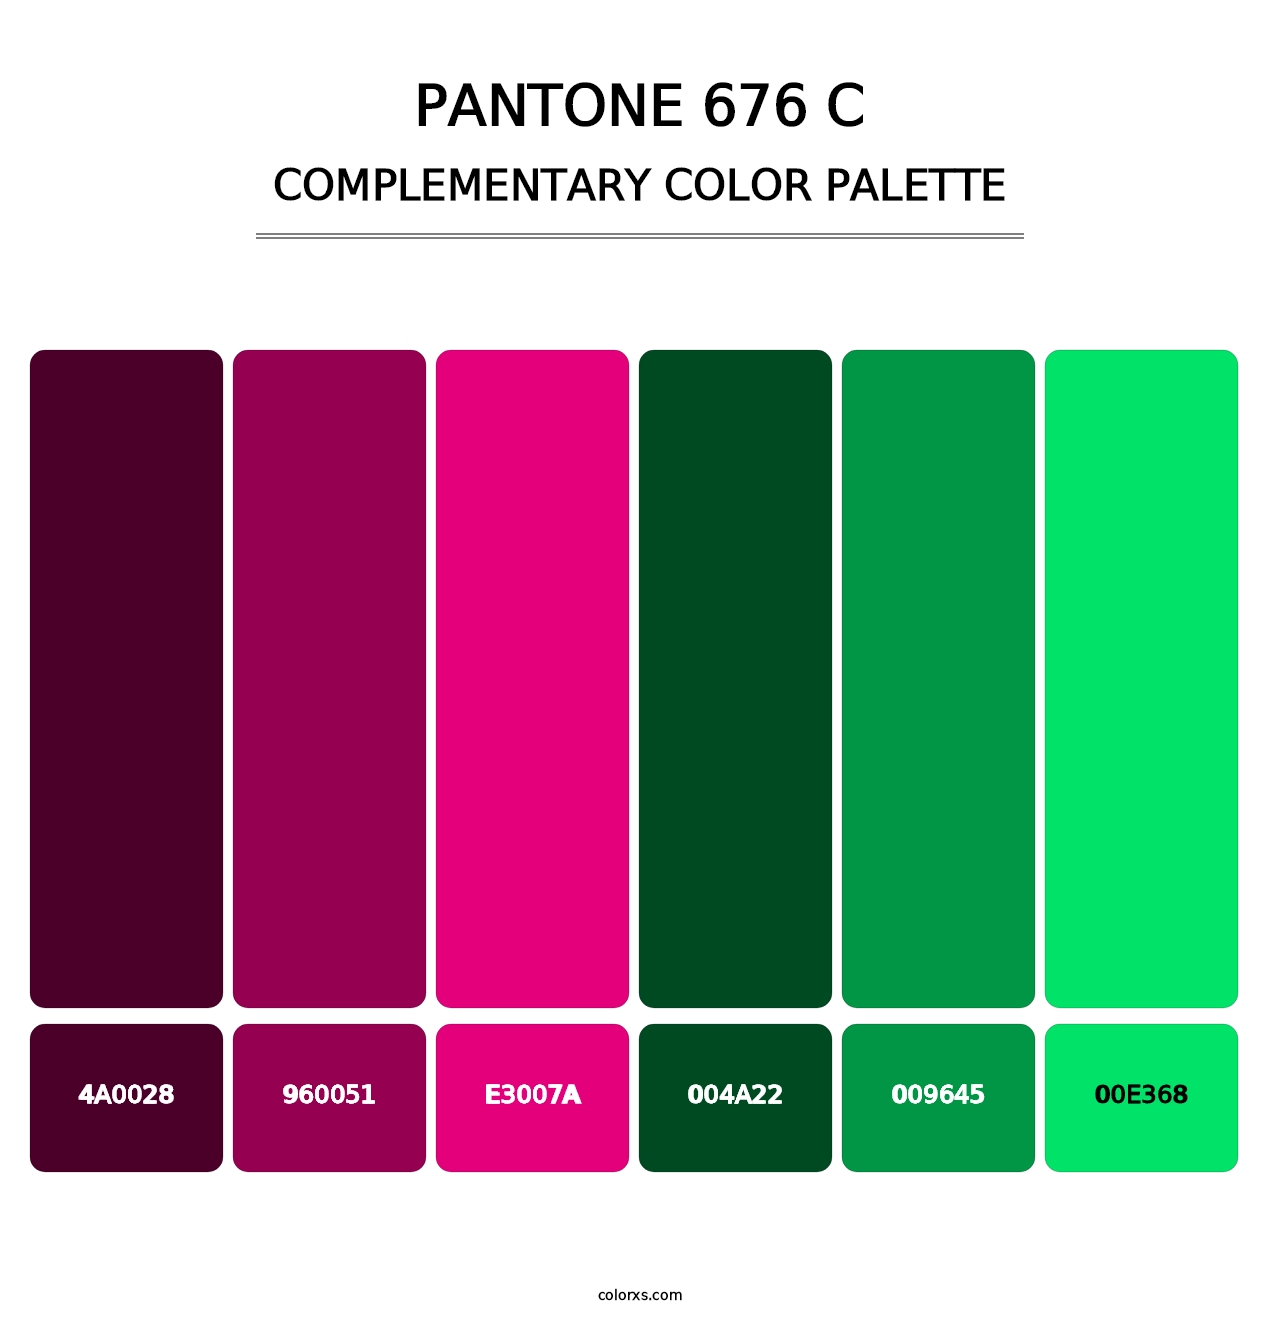 PANTONE 676 C - Complementary Color Palette